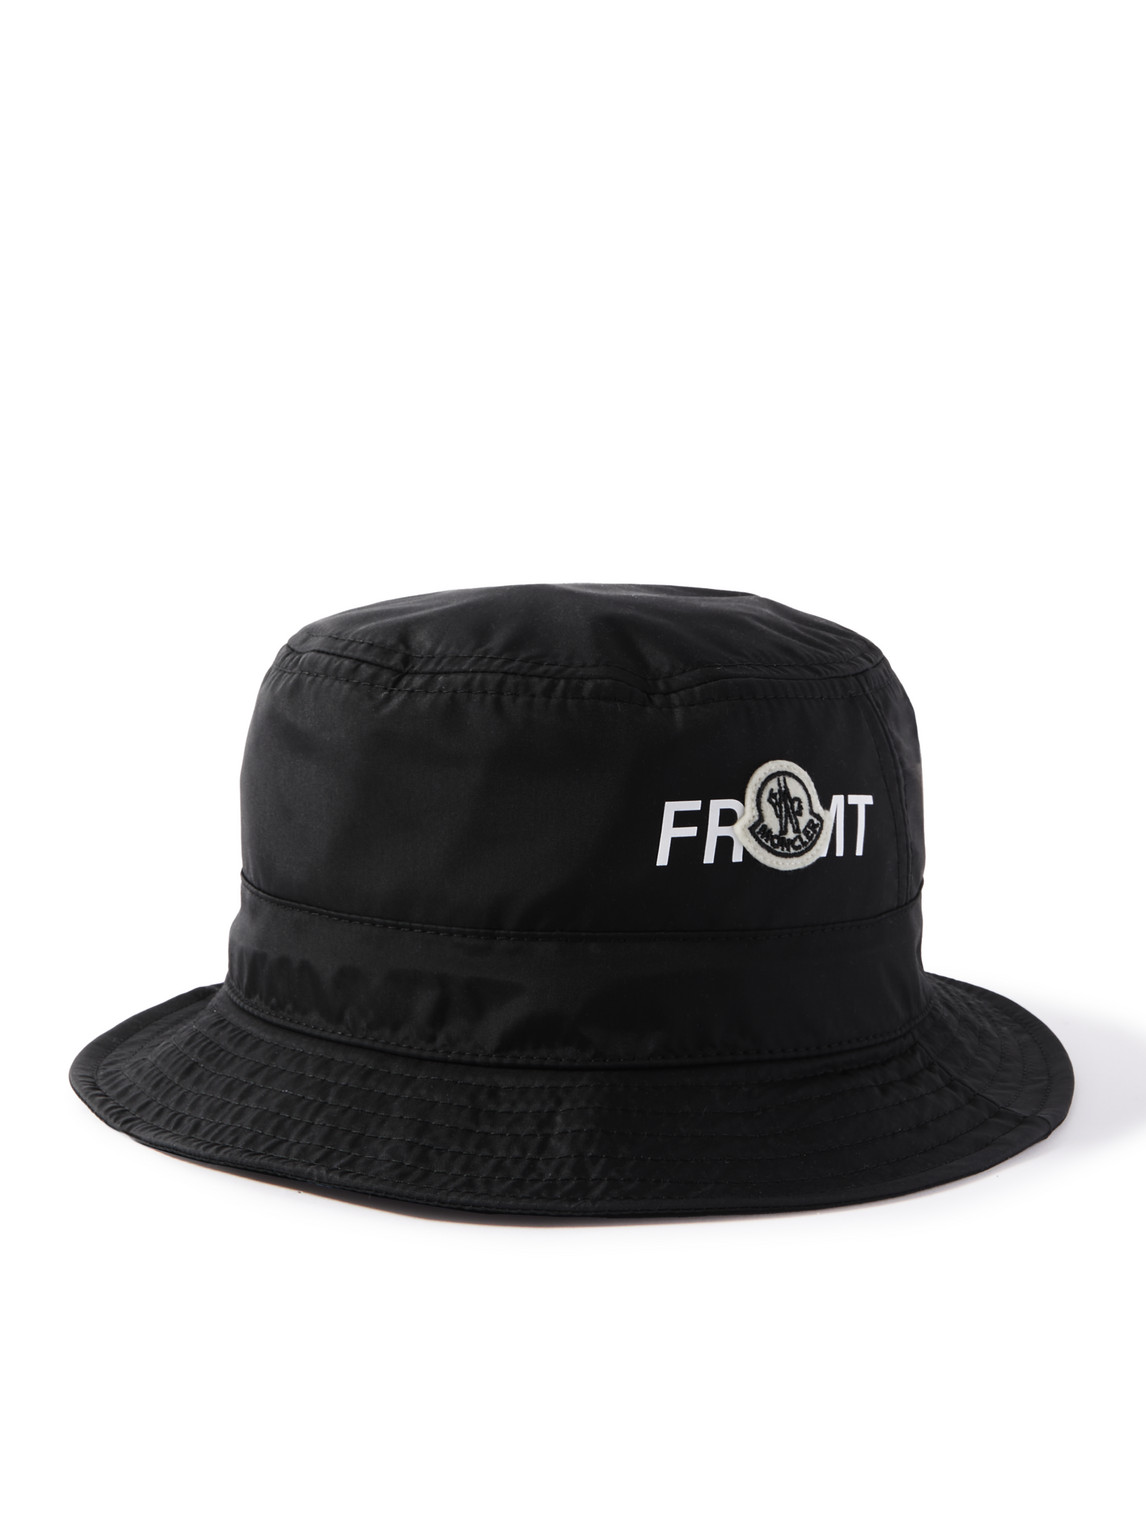 7 Moncler FRGMT Hiroshi Fujiwara Logo-Appliquéd Shell Bucket Hat